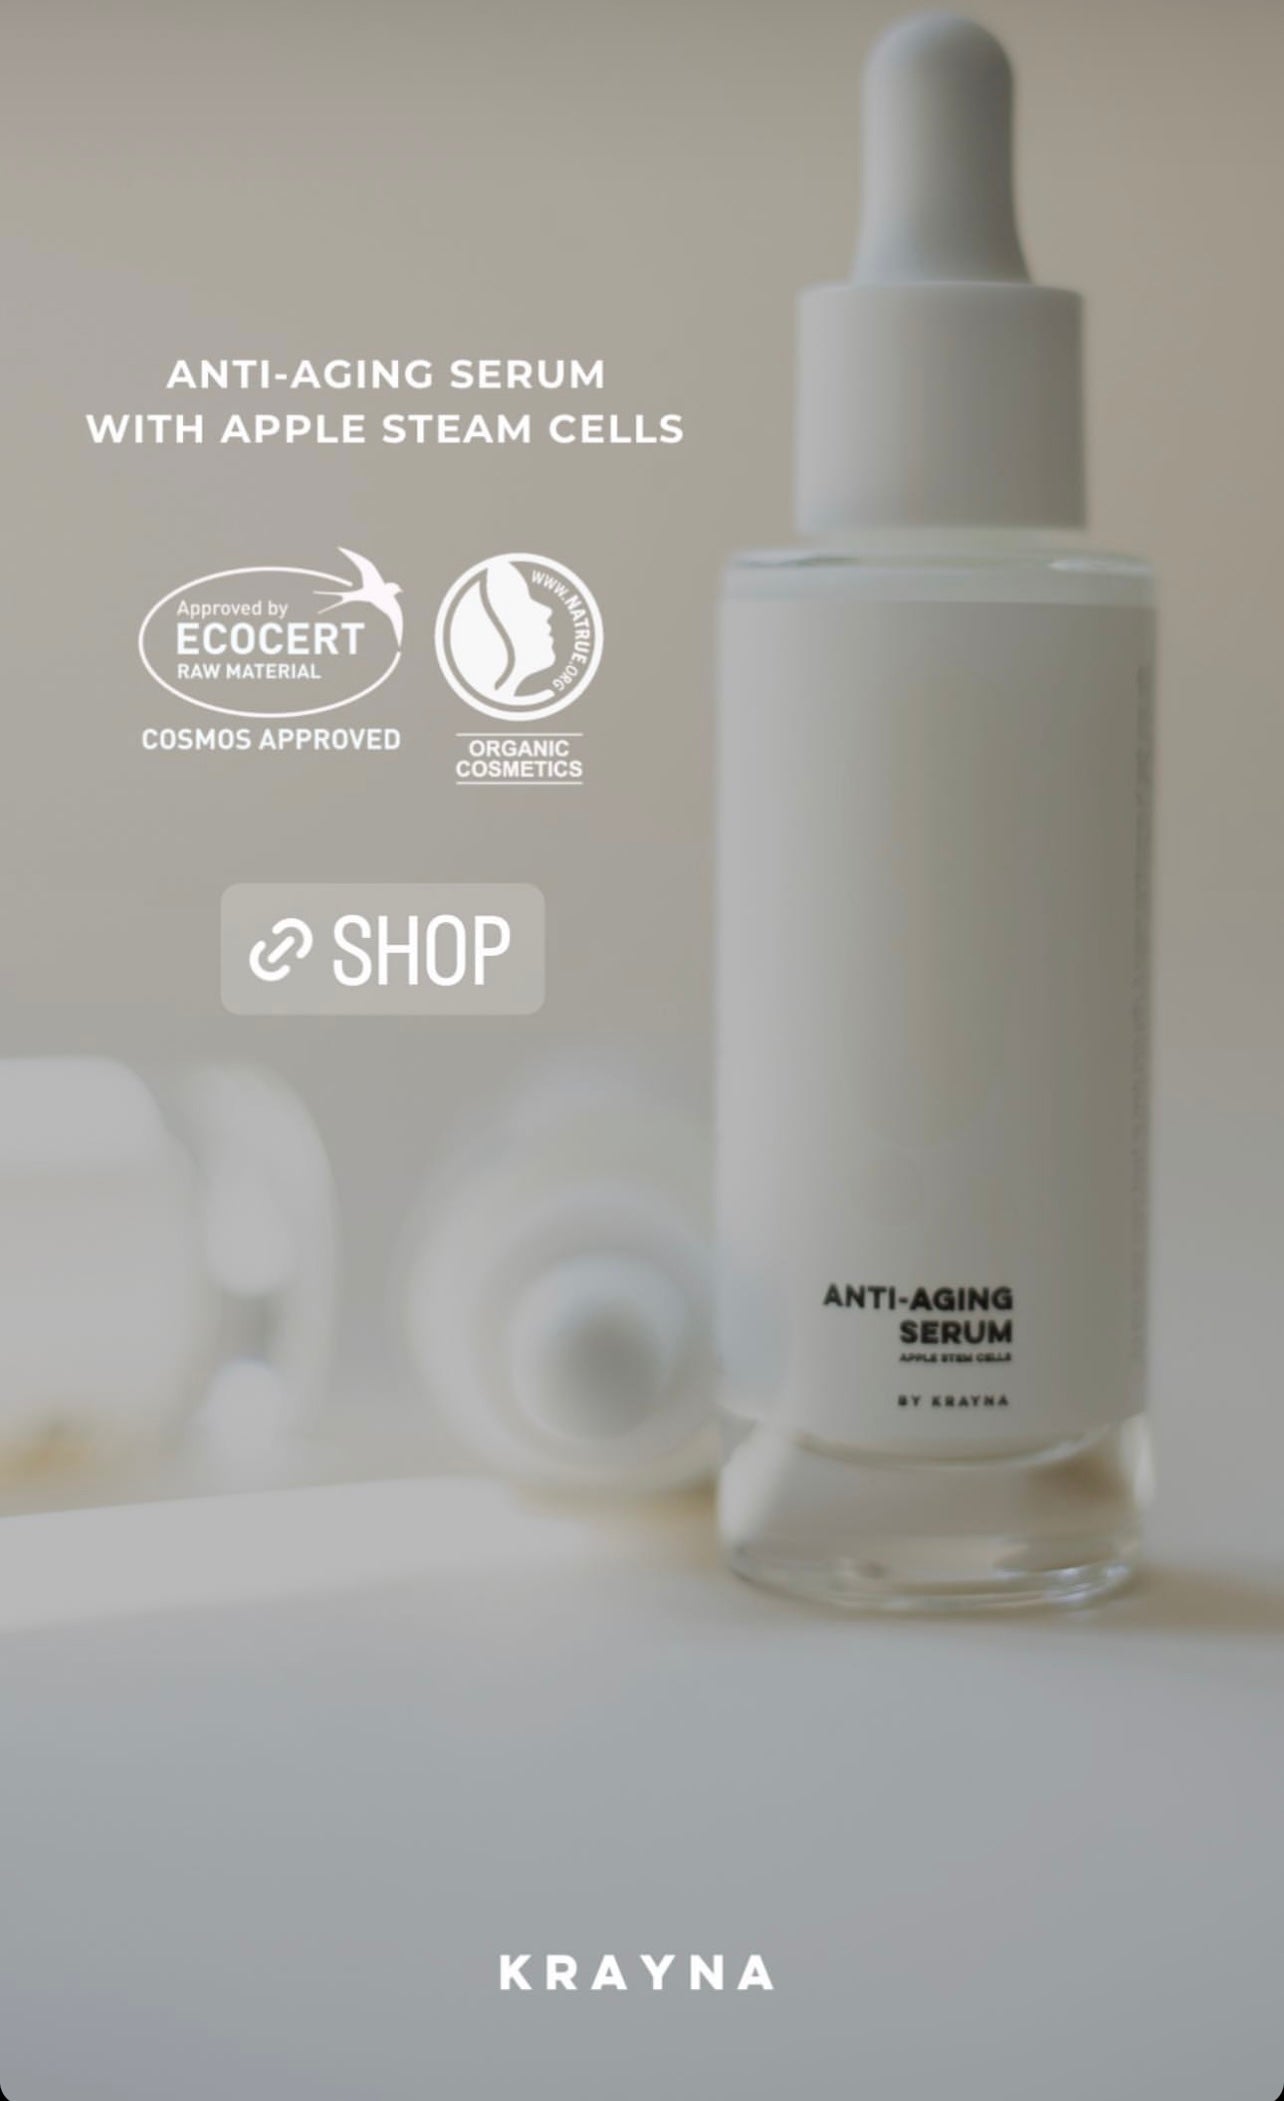 Anti-aging serum apple stem cells